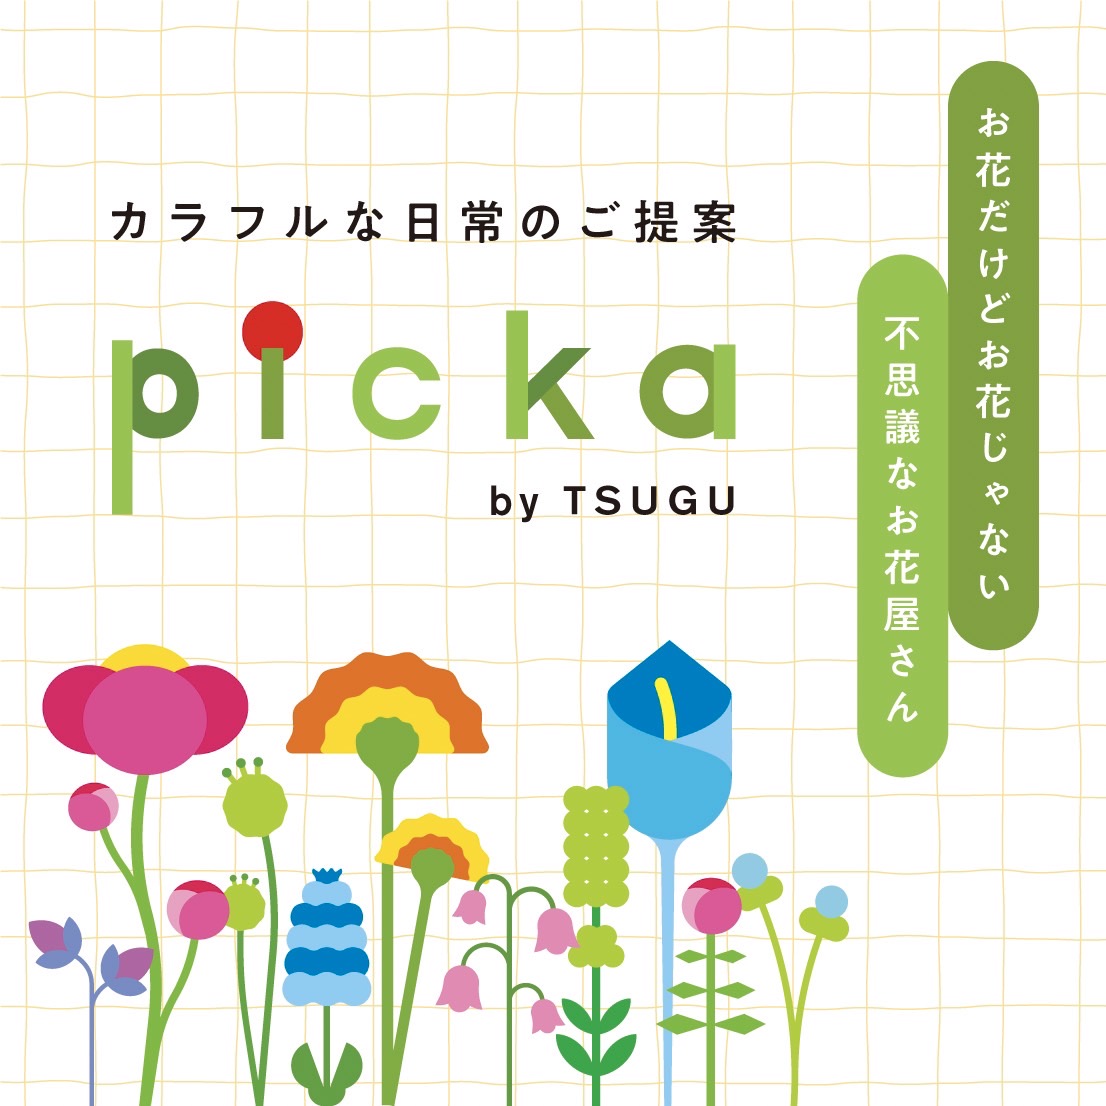 TSUGU】『picka』のECサイトがオープンしました【picka】 | 有限会社寺平美術平版【京都】ベタ刷り・特色印刷は当社おまかせください